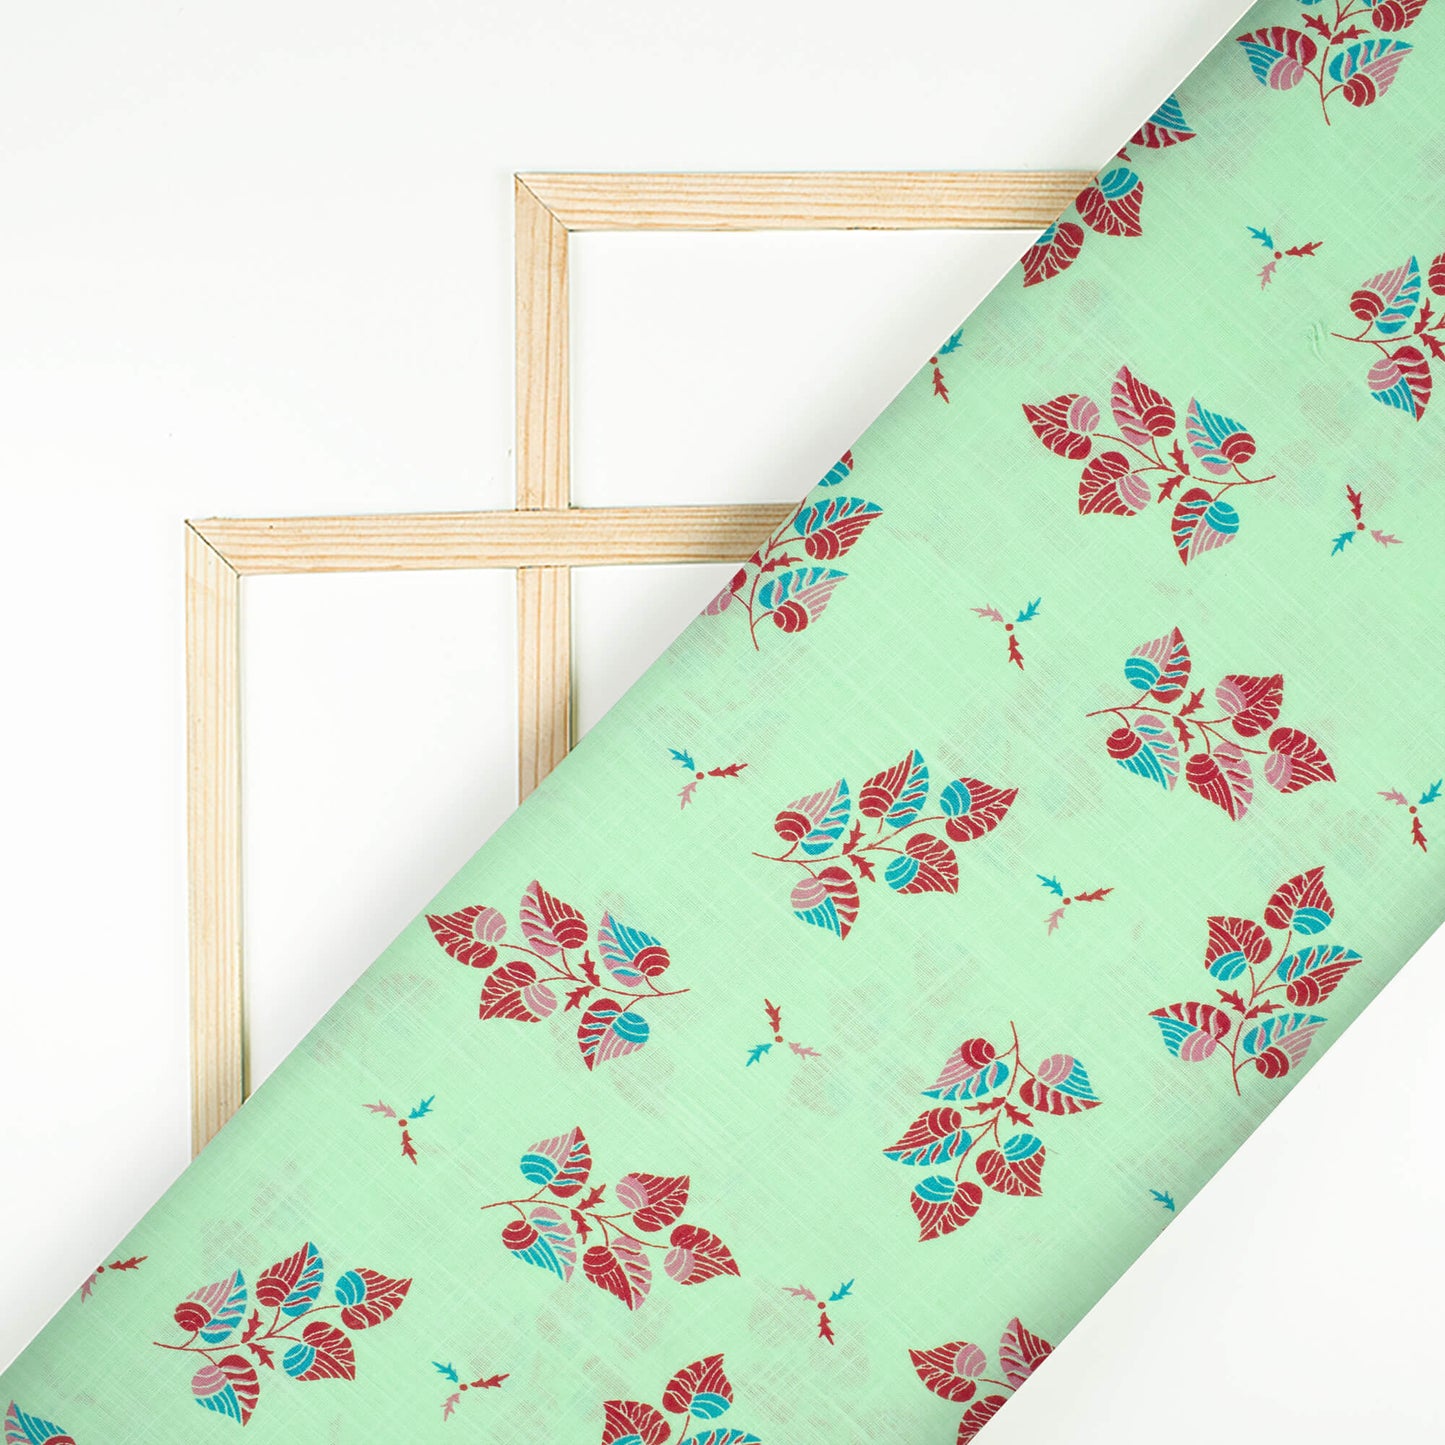 Mint Green And Cherry Red Leaf Pattern Screen Print Cotton Slub Fabric